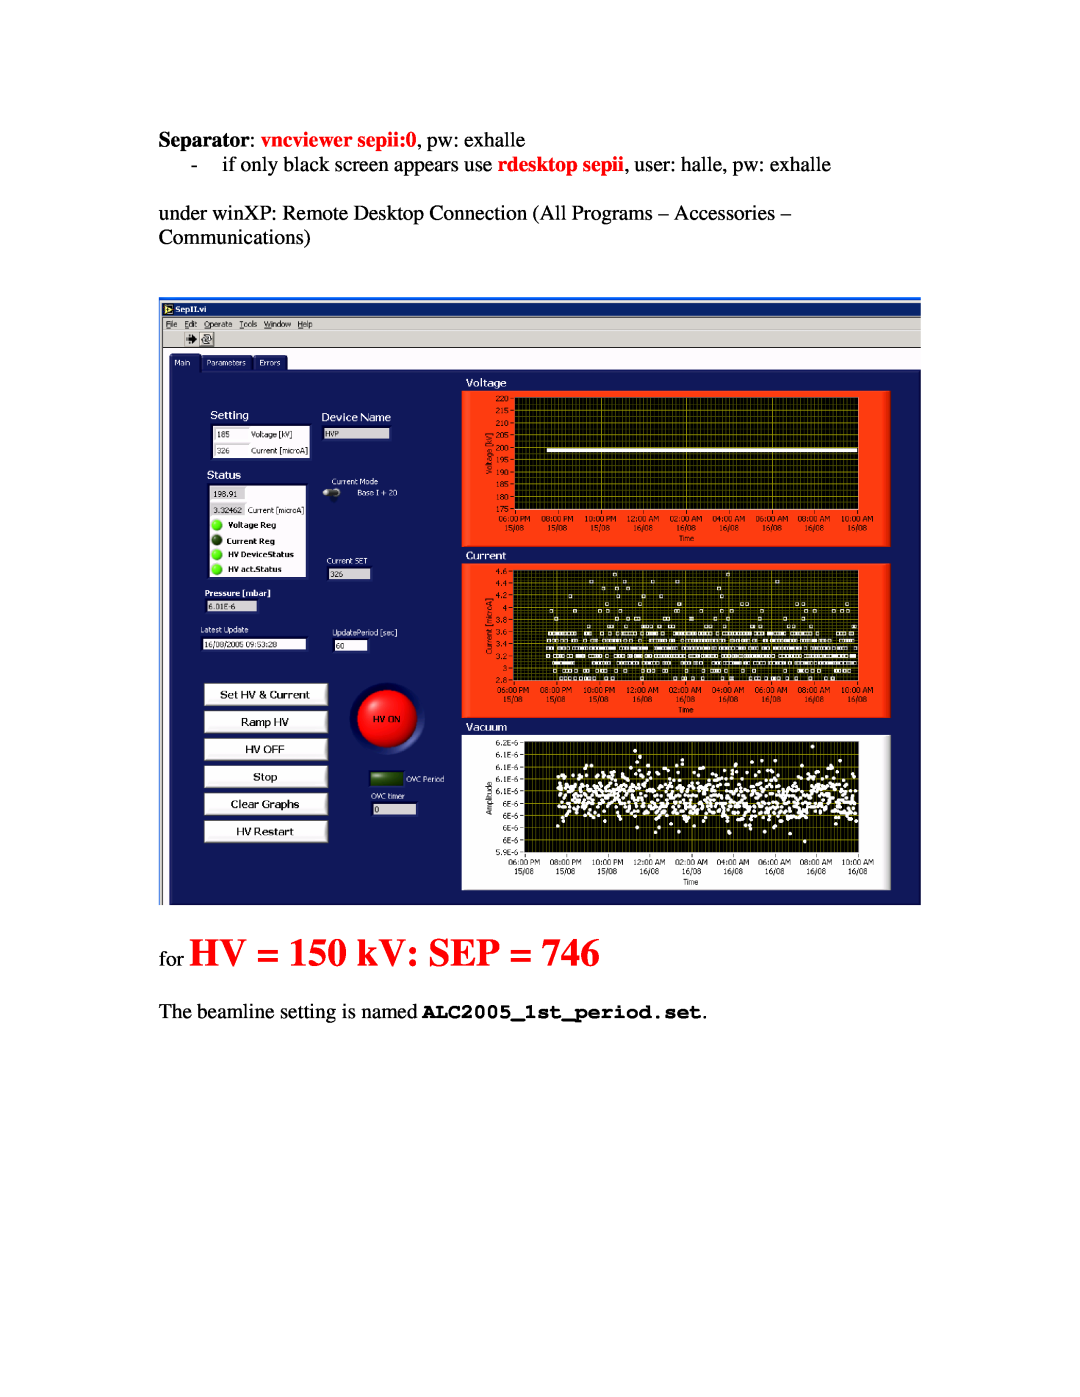 Midas Consoles SR35 user manual Separator vncviewer sepii0, pw exhalle, for HV = 150 kV SEP = 